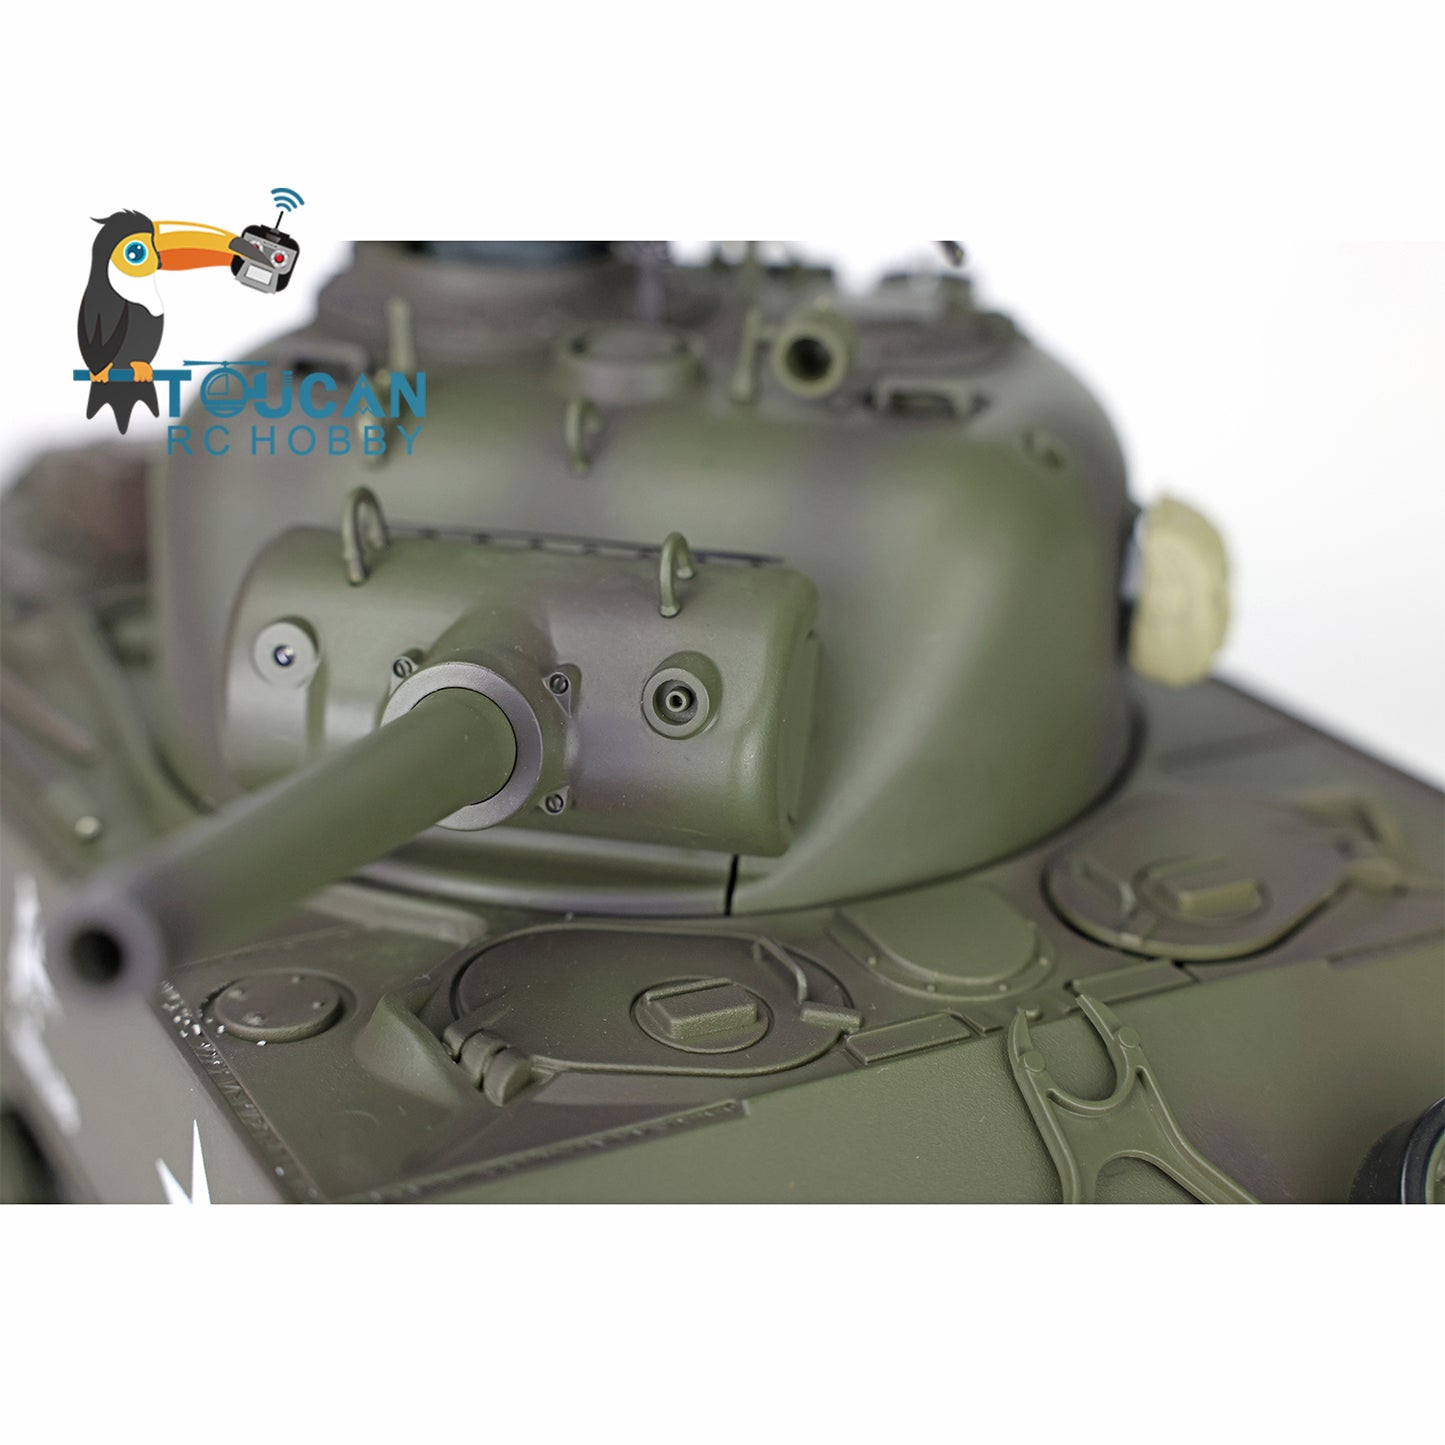 Henglong 1/16 TK7.0 Plastic M4A3 Sherman RC Tank Model 3898 w/ 360 Degrees Rotating Turret FPV Barrel Recoil Smoking Gift for Boys